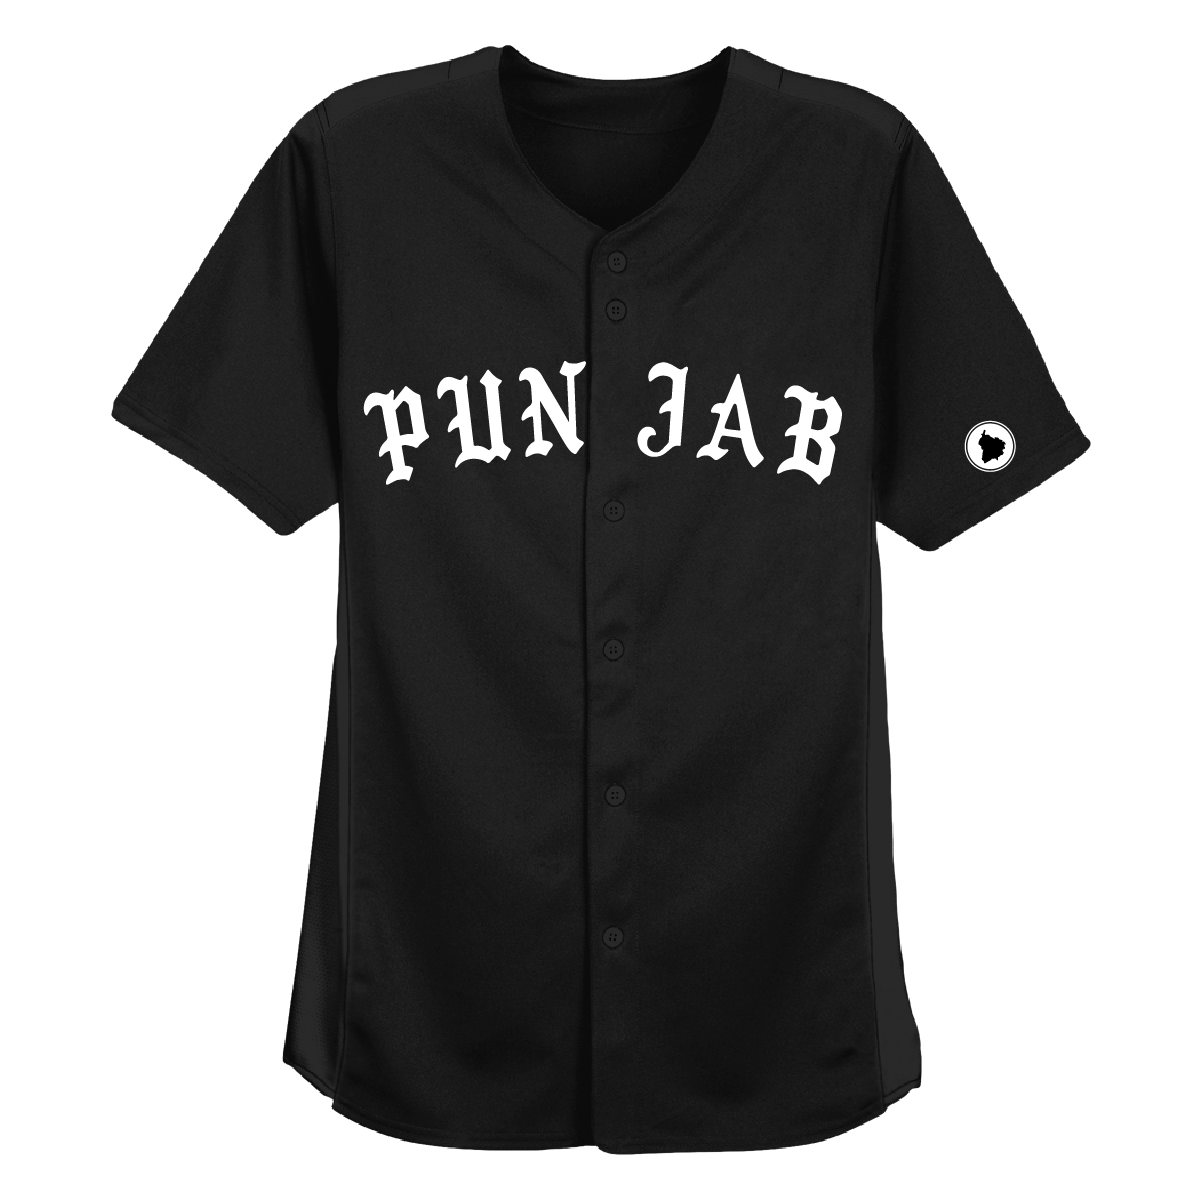 black baseball jersey